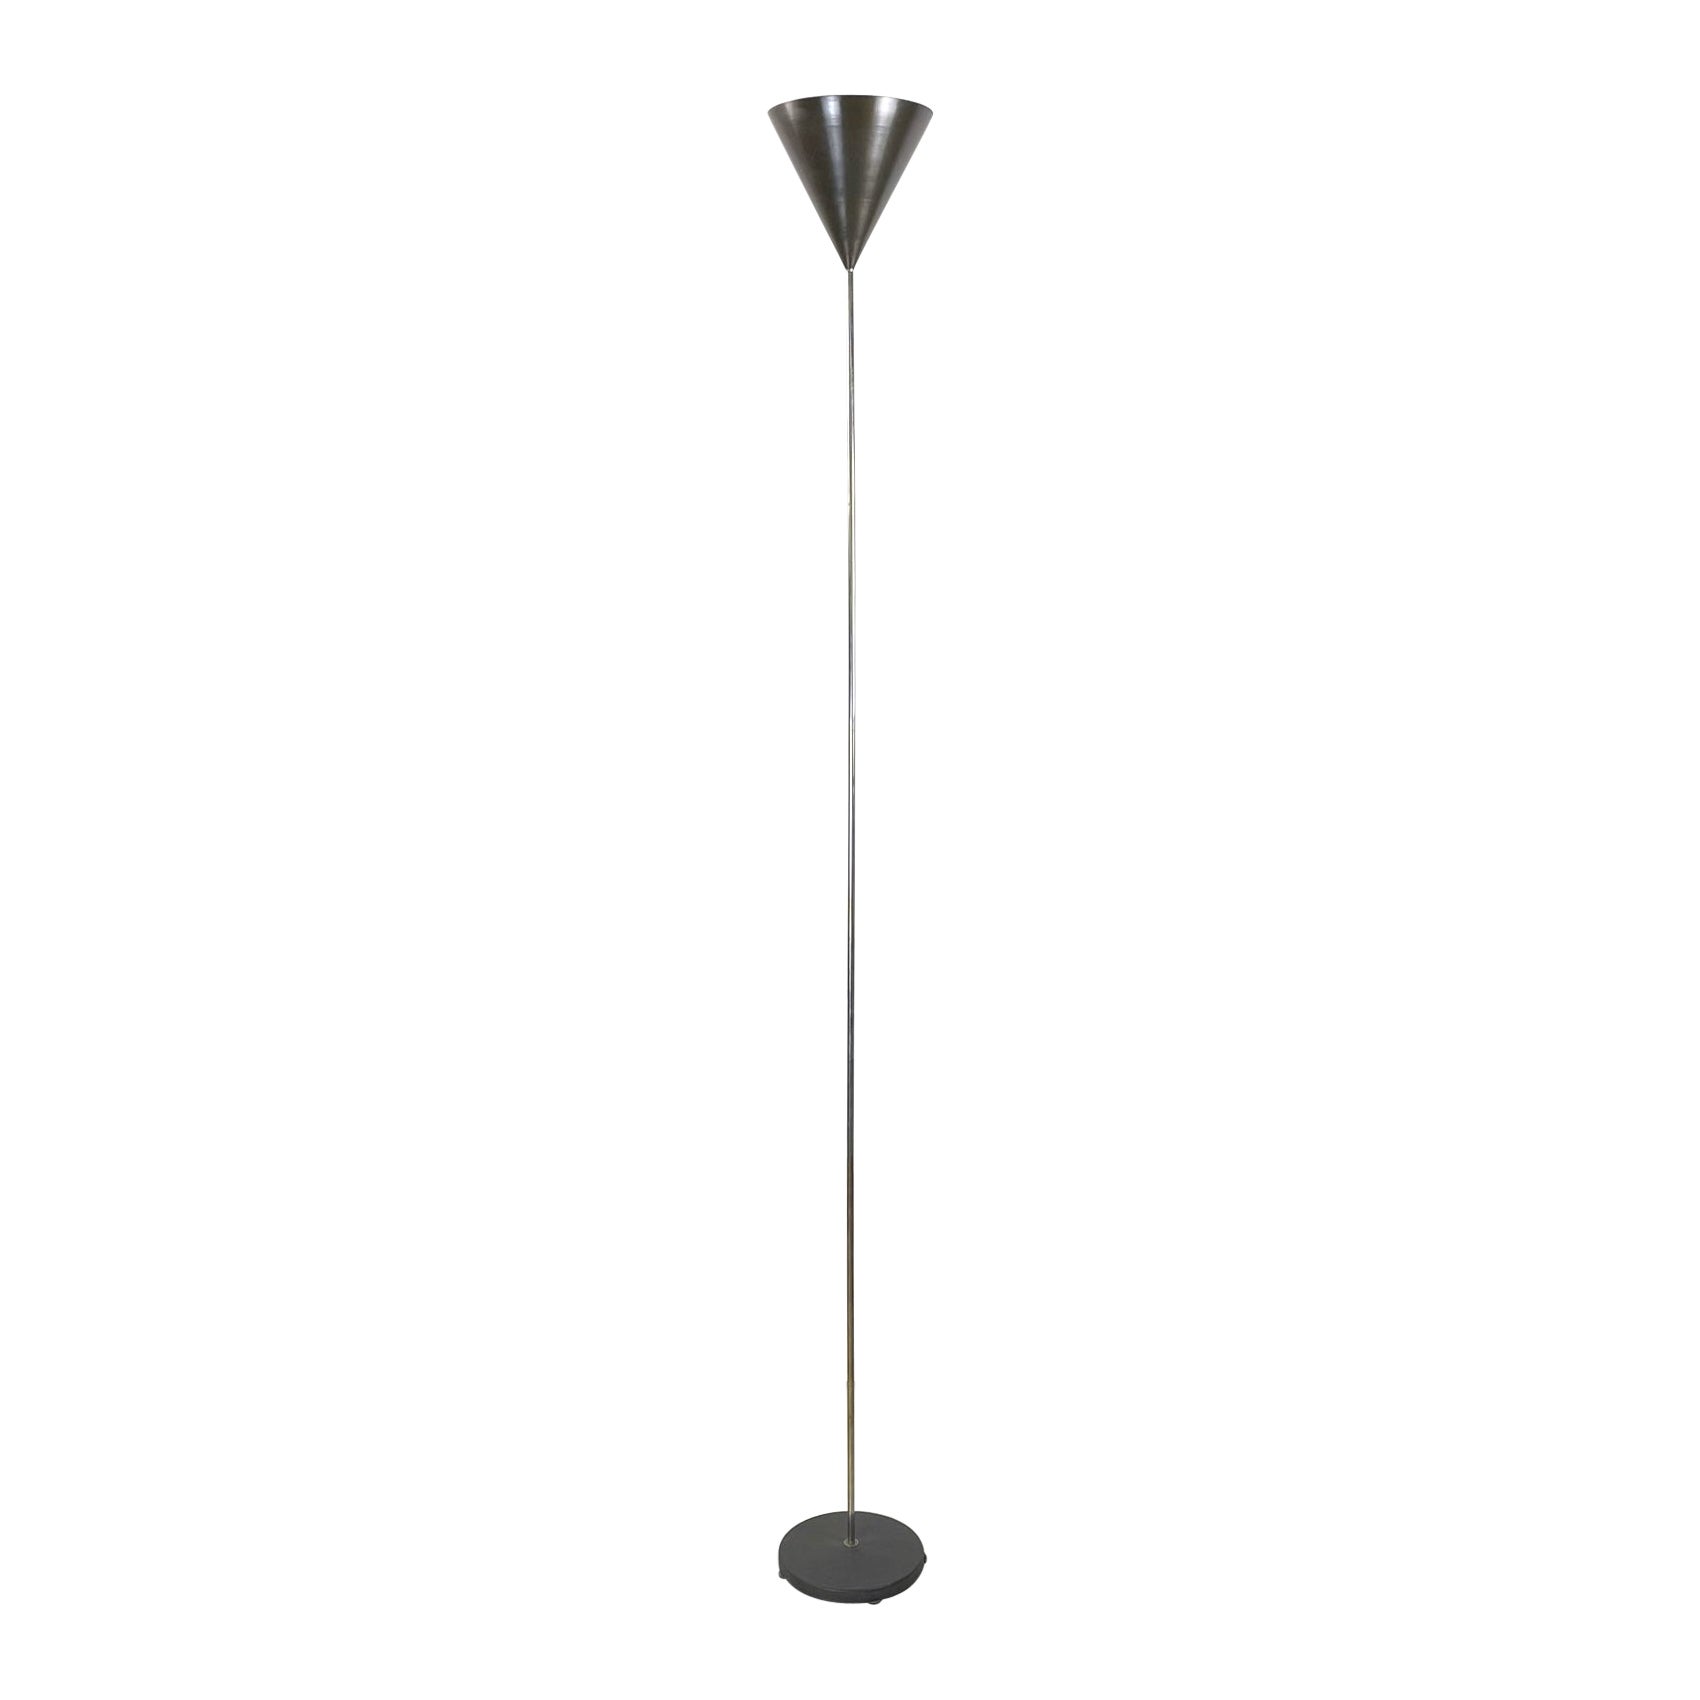 Italian Midcentury Floor Lamp Imbuto by Caccia Dominioni for Azucena, 1960s